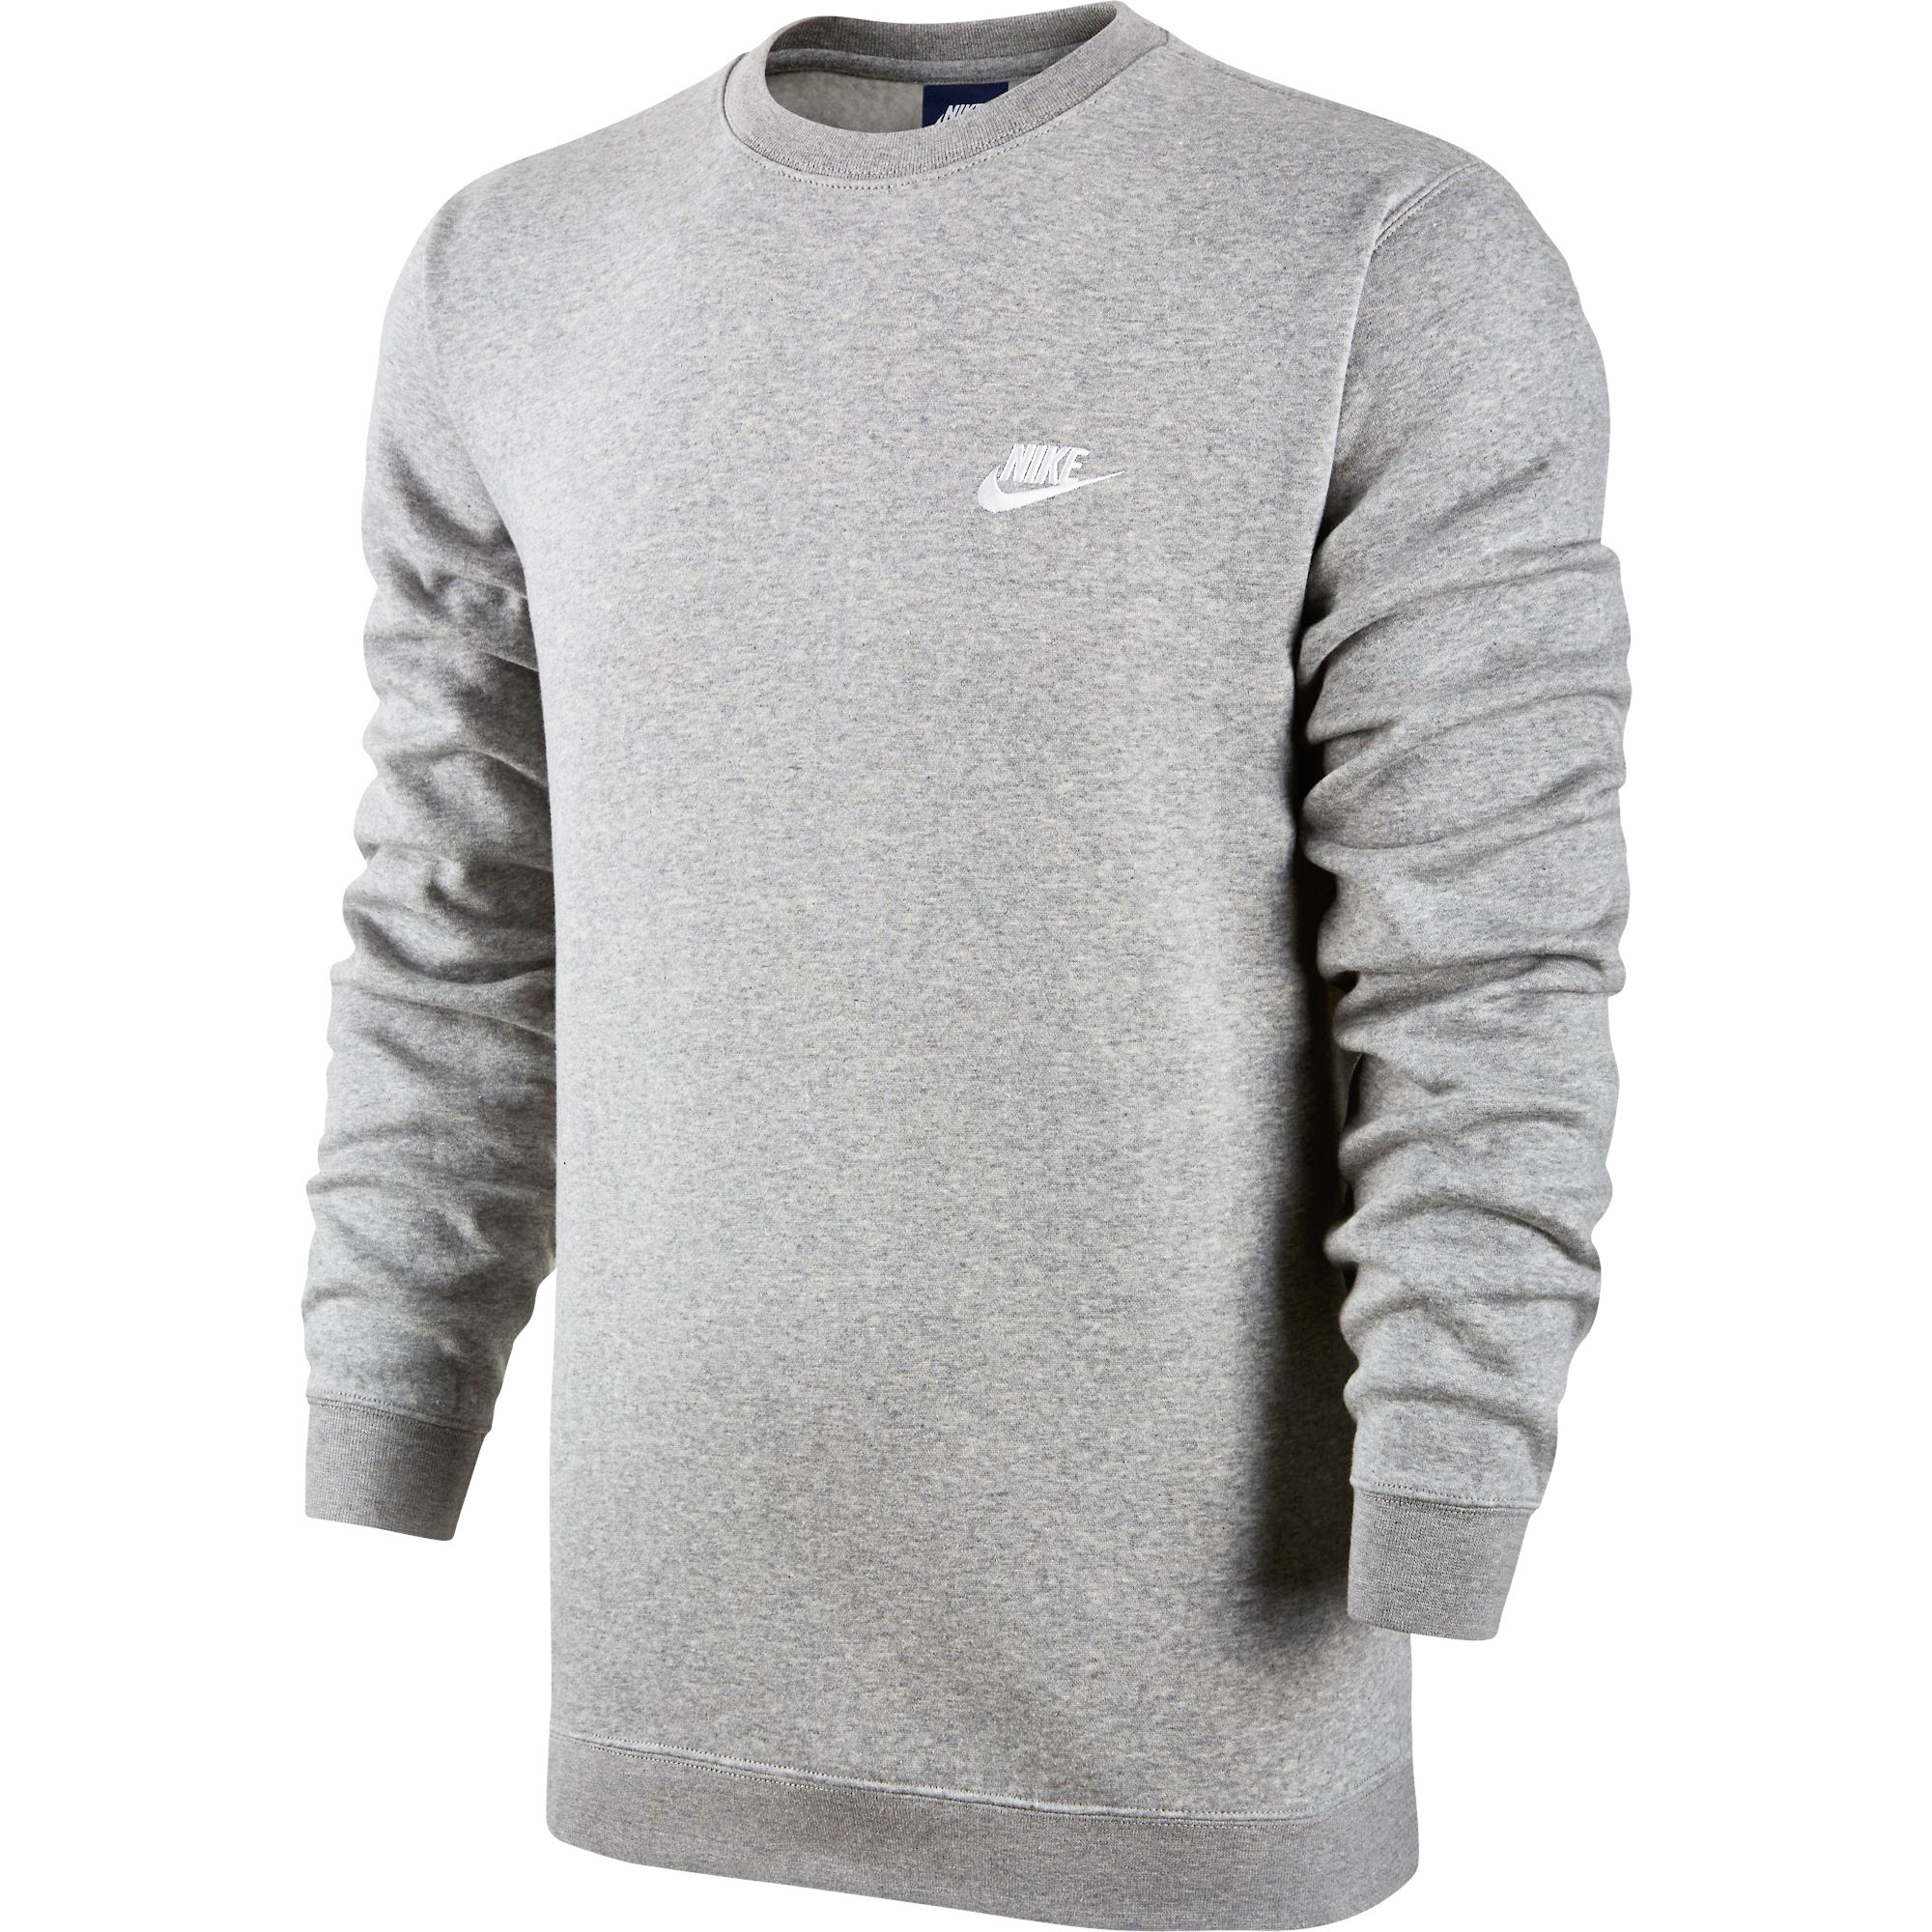 Nike Club Fleece Crew Neck Men's T-Shirt Grey Heather/White 804340-063